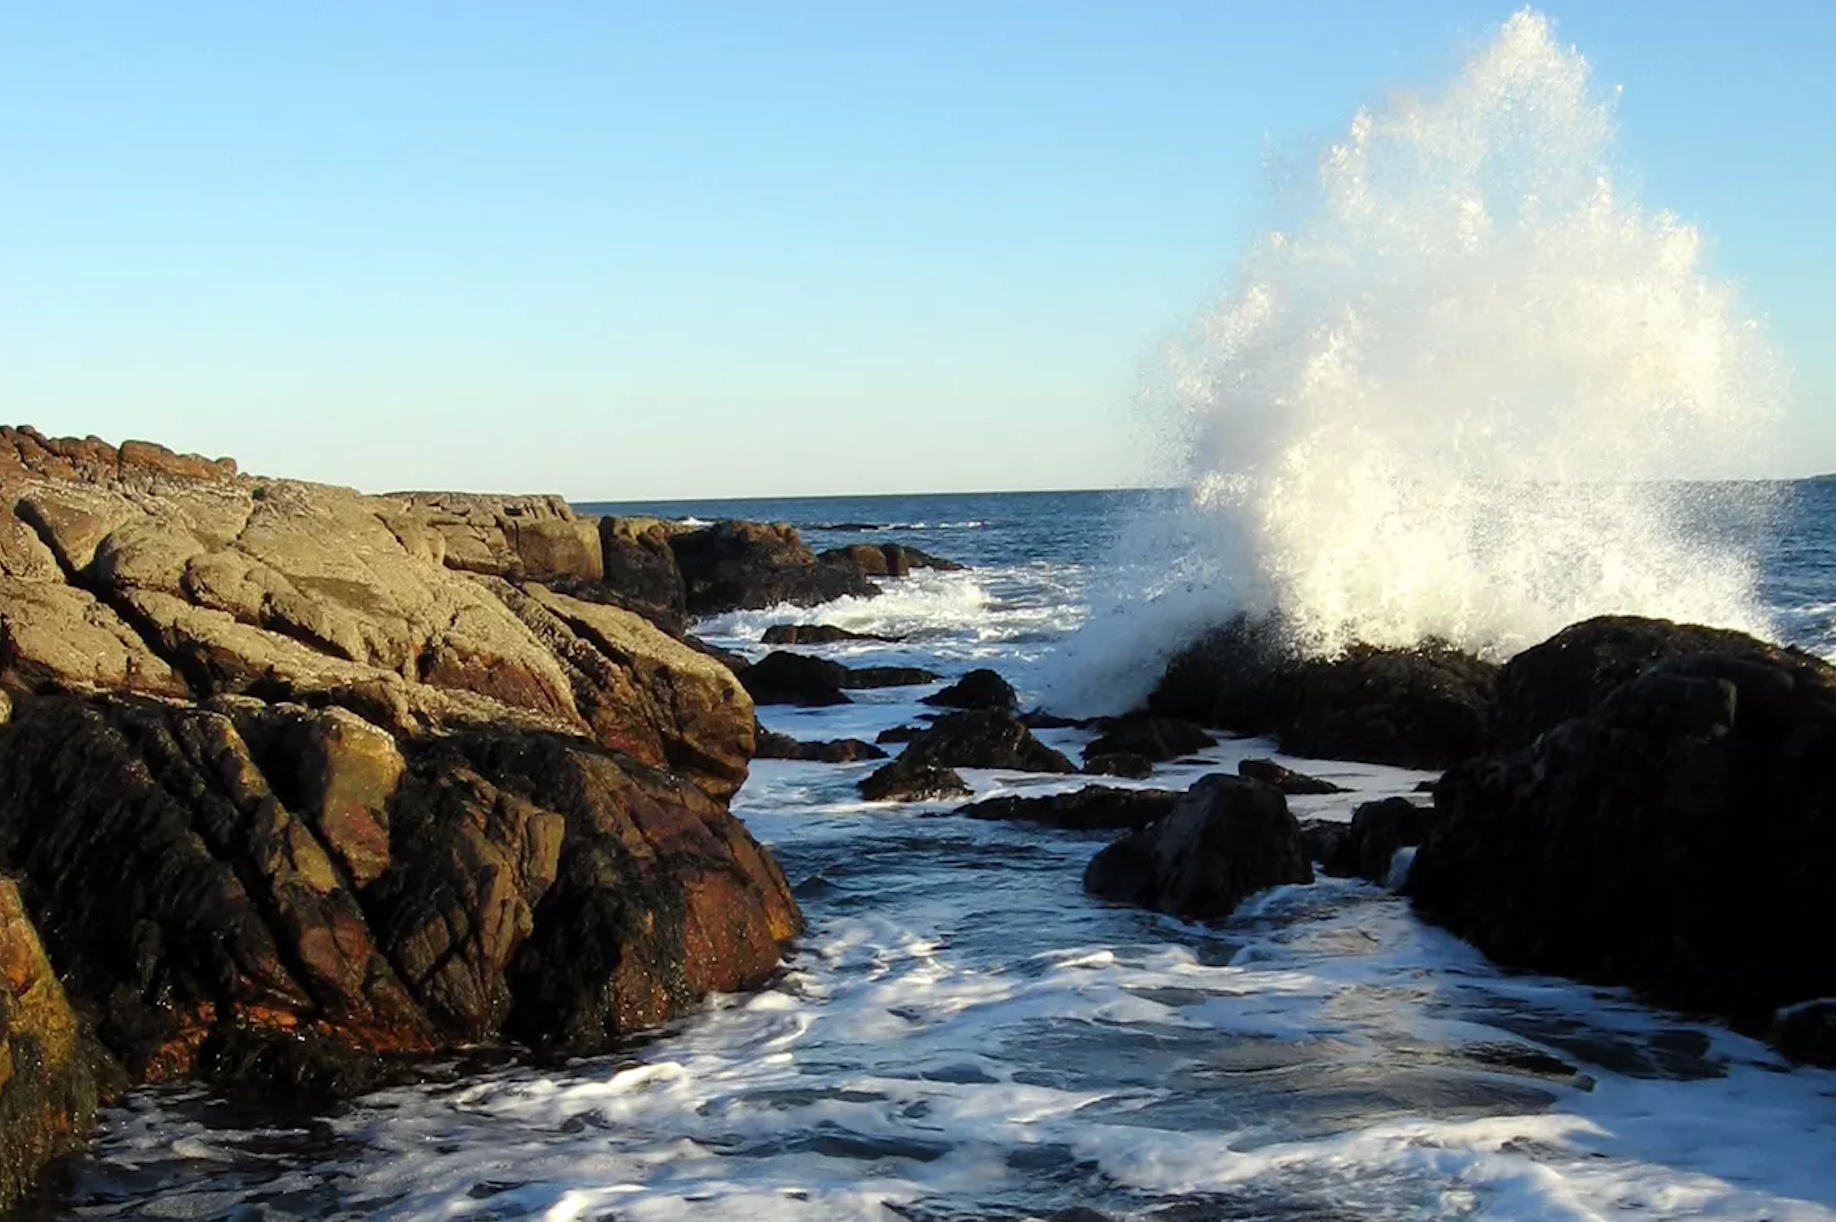 Ocean rocks, coastal rocks, wave crashing on rocks